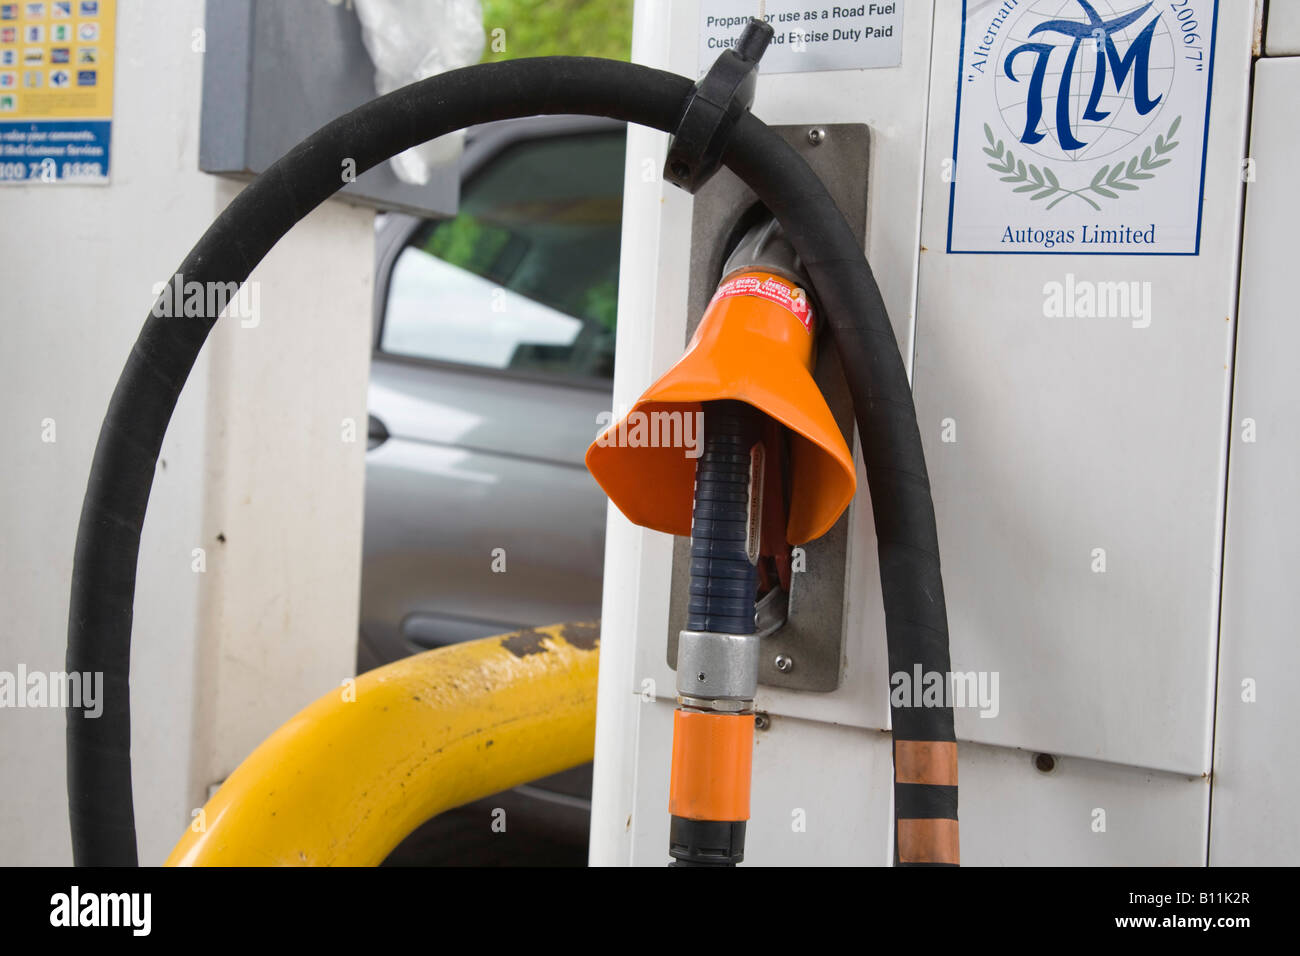 Autogas pump nozzle in petrol filling station garage Britain UK Stock Photo